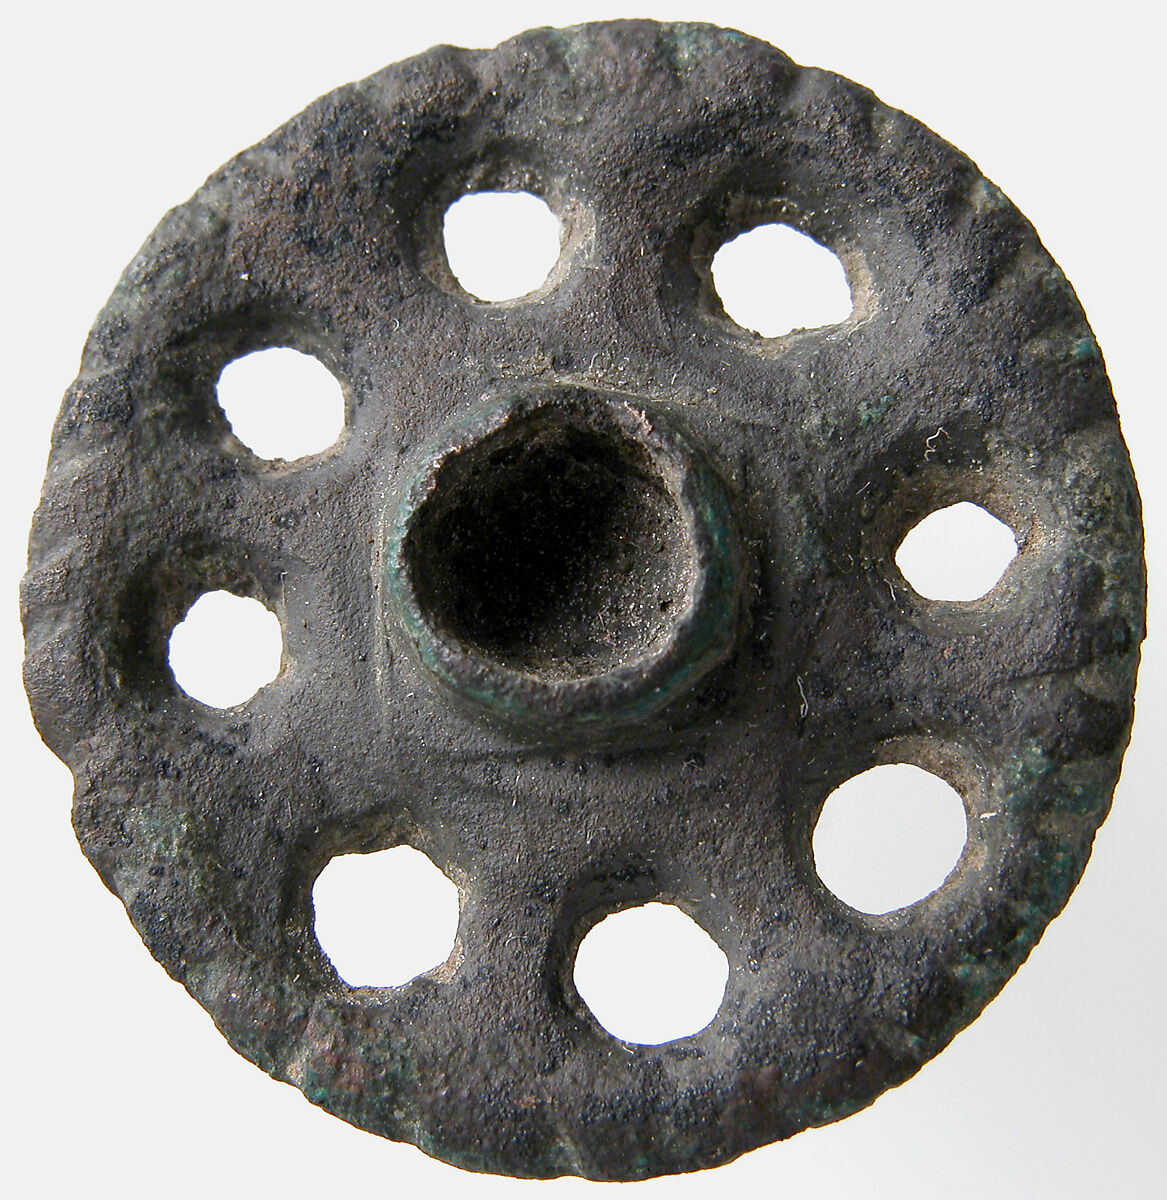 Disk Brooch, Copper alloy, champlevé enamel, Merovingian 